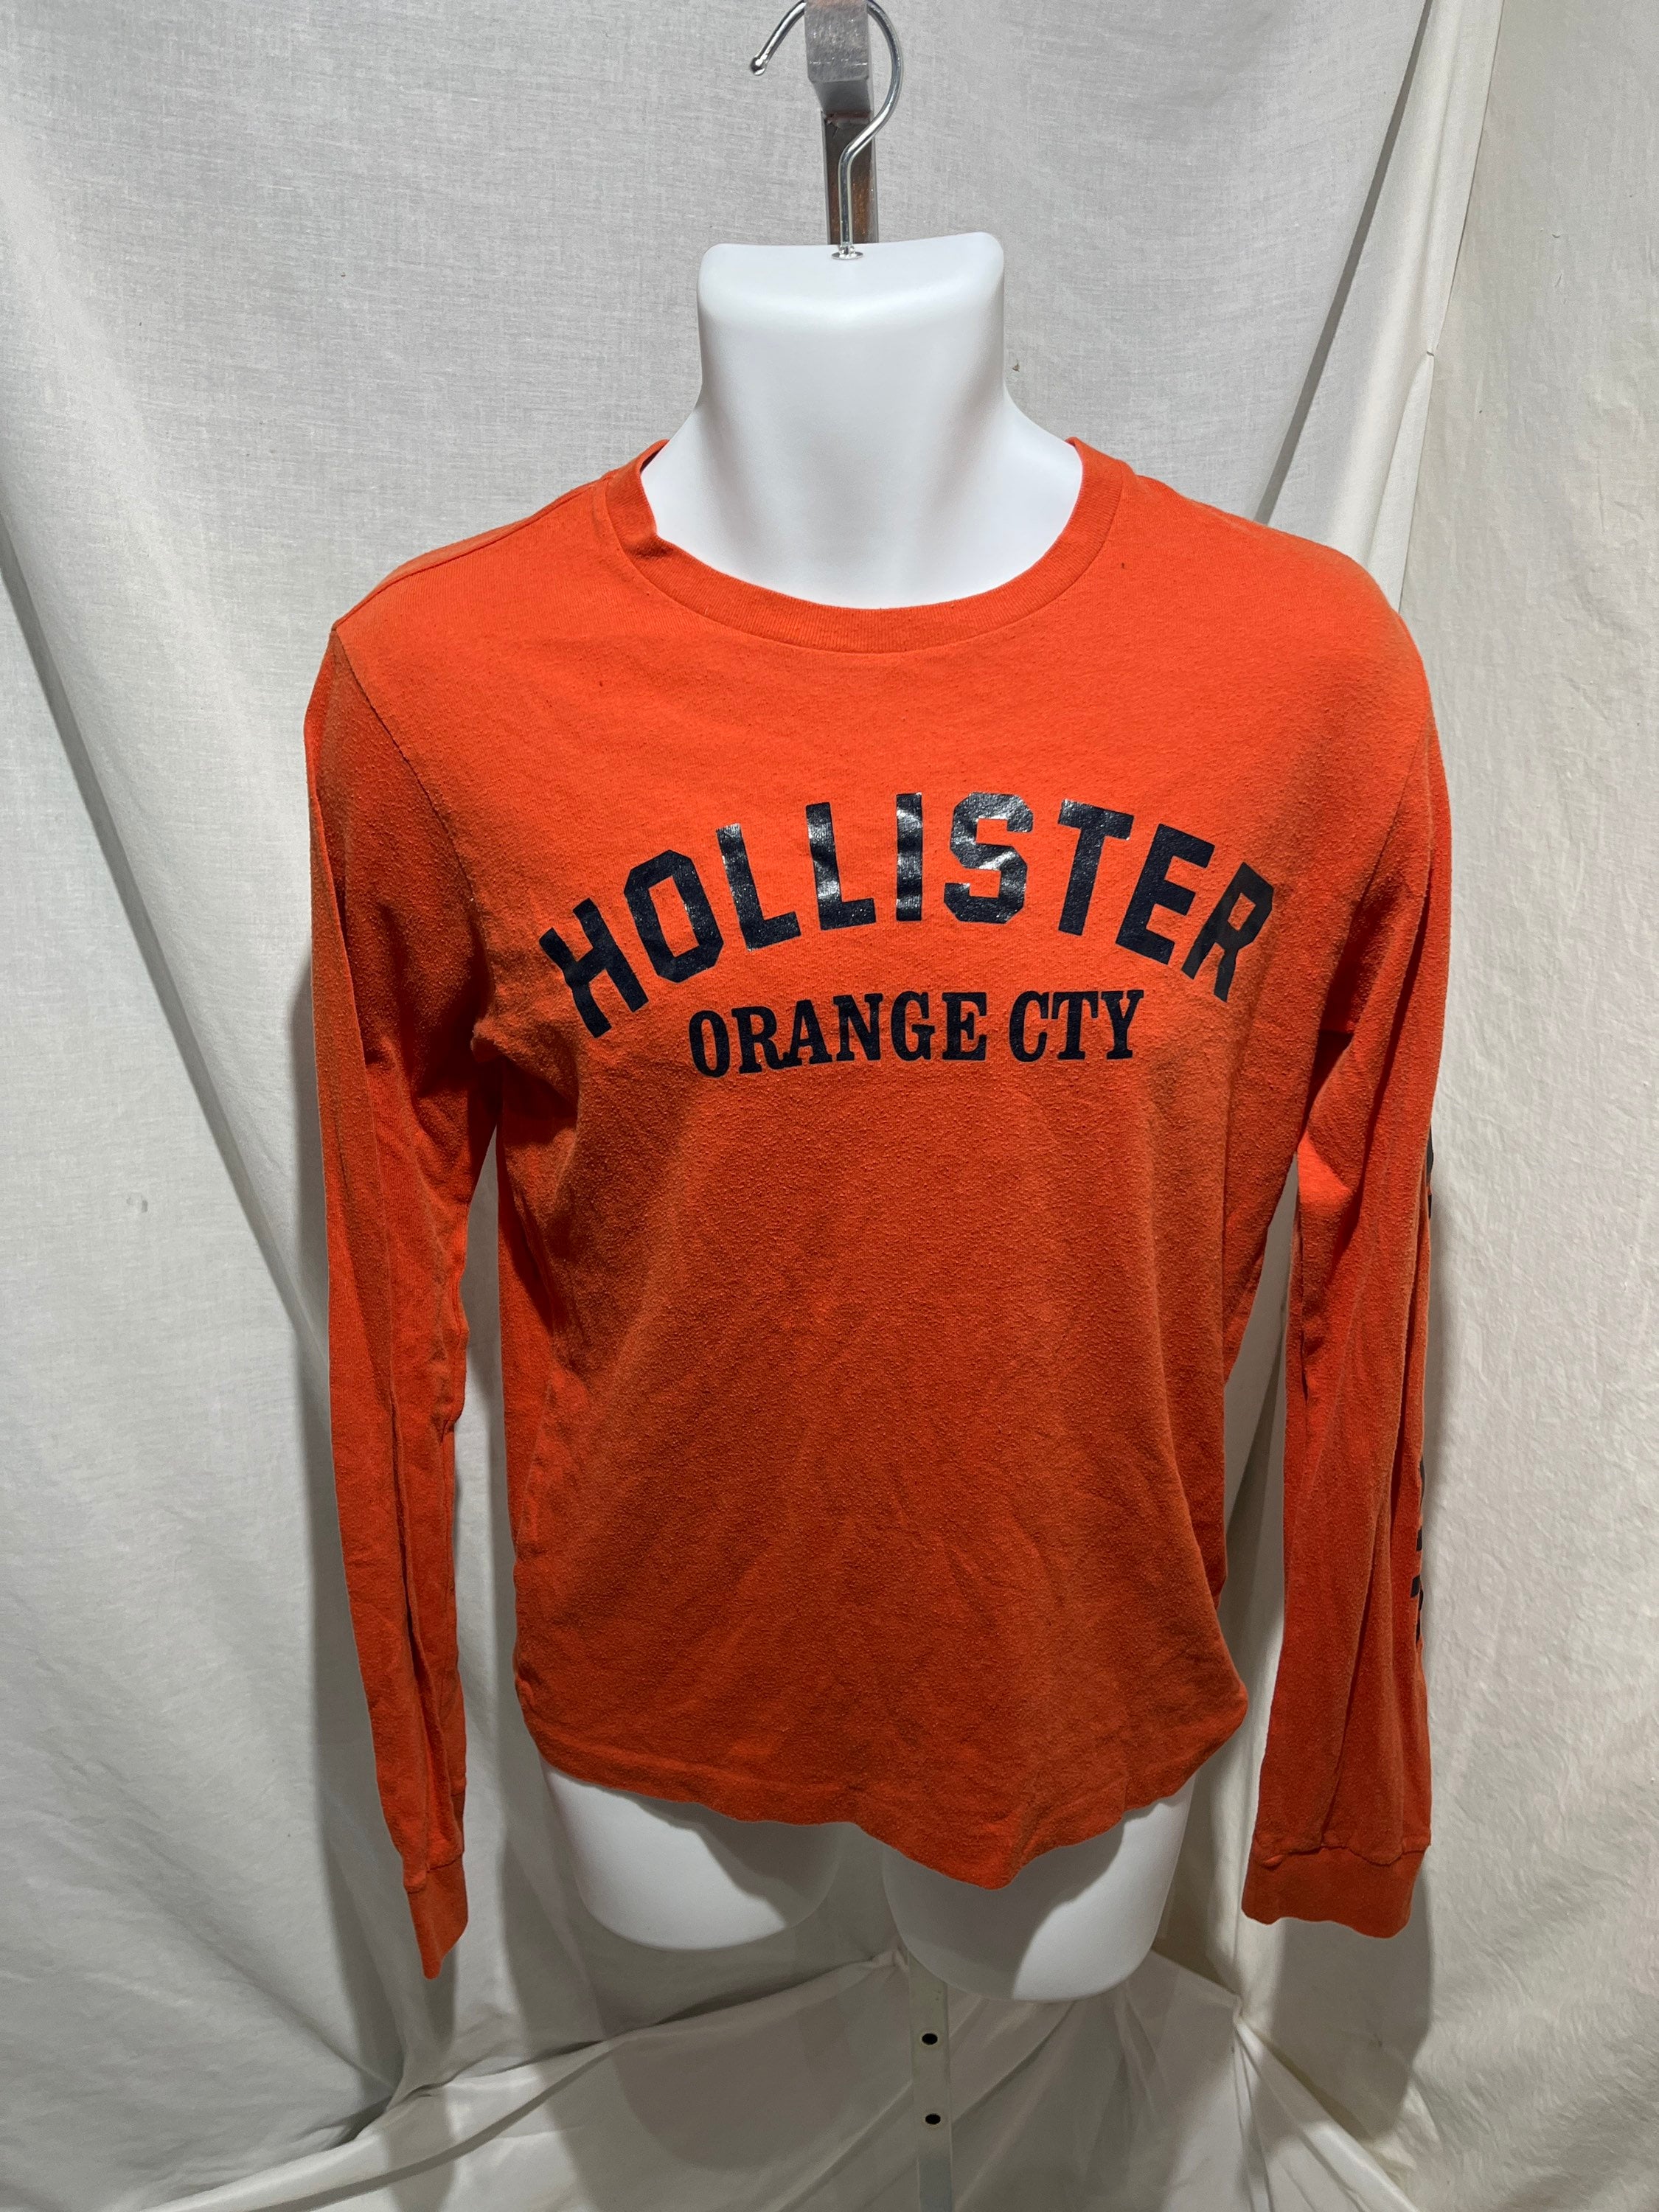 Vintage Hollister Long Sleeve Shirt Excellent Condition, Size M 